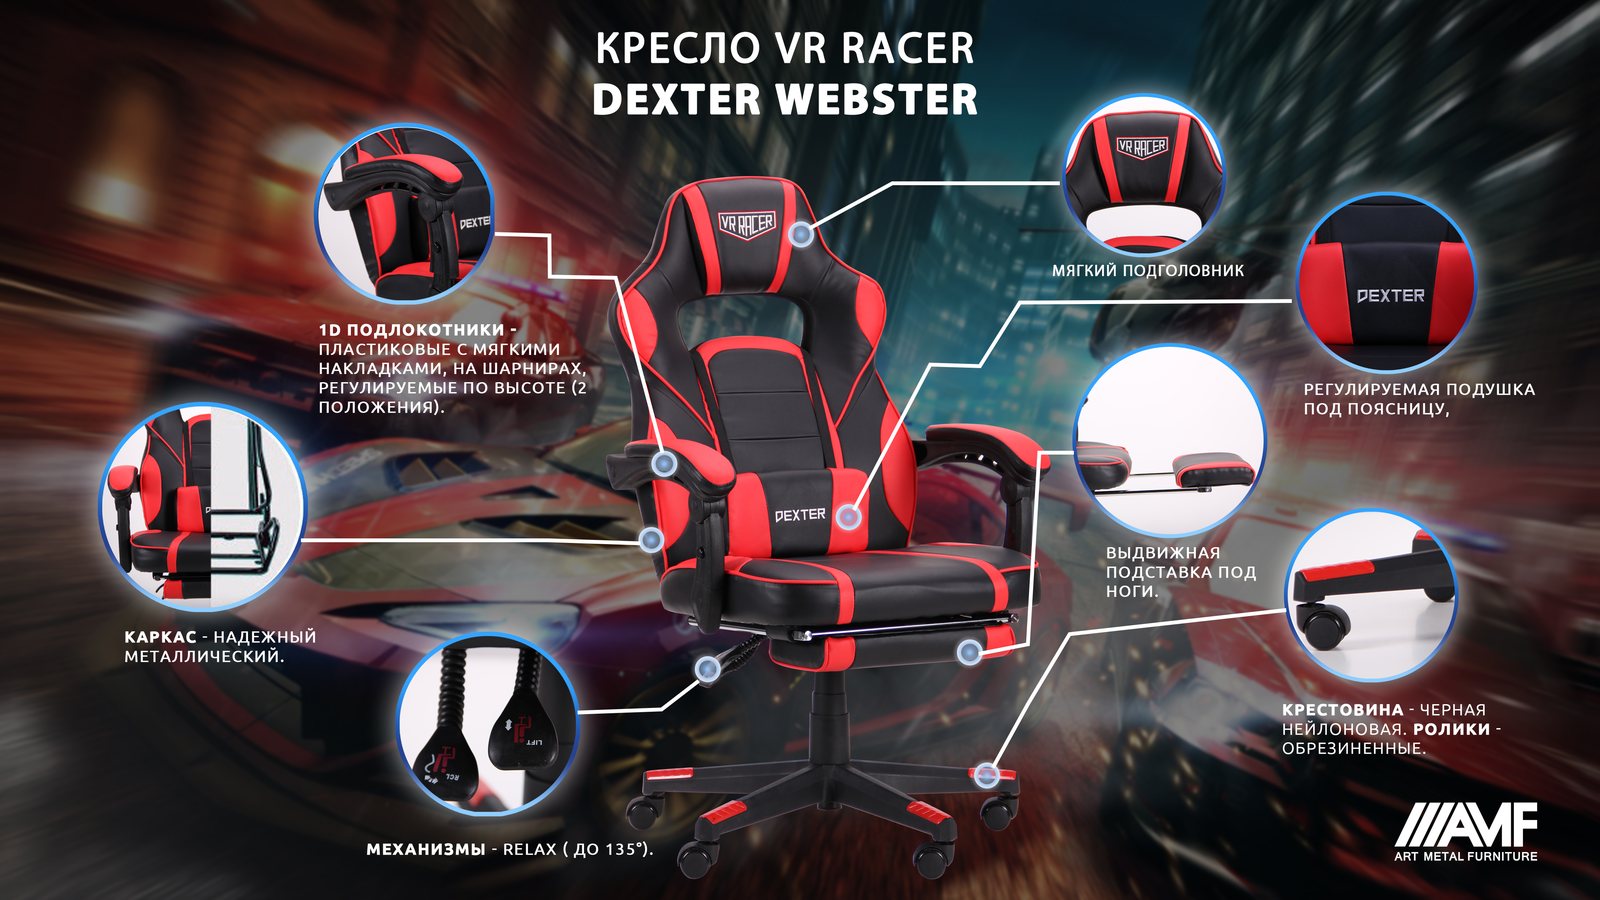 Кресло VR Racer Dexter Webster описание